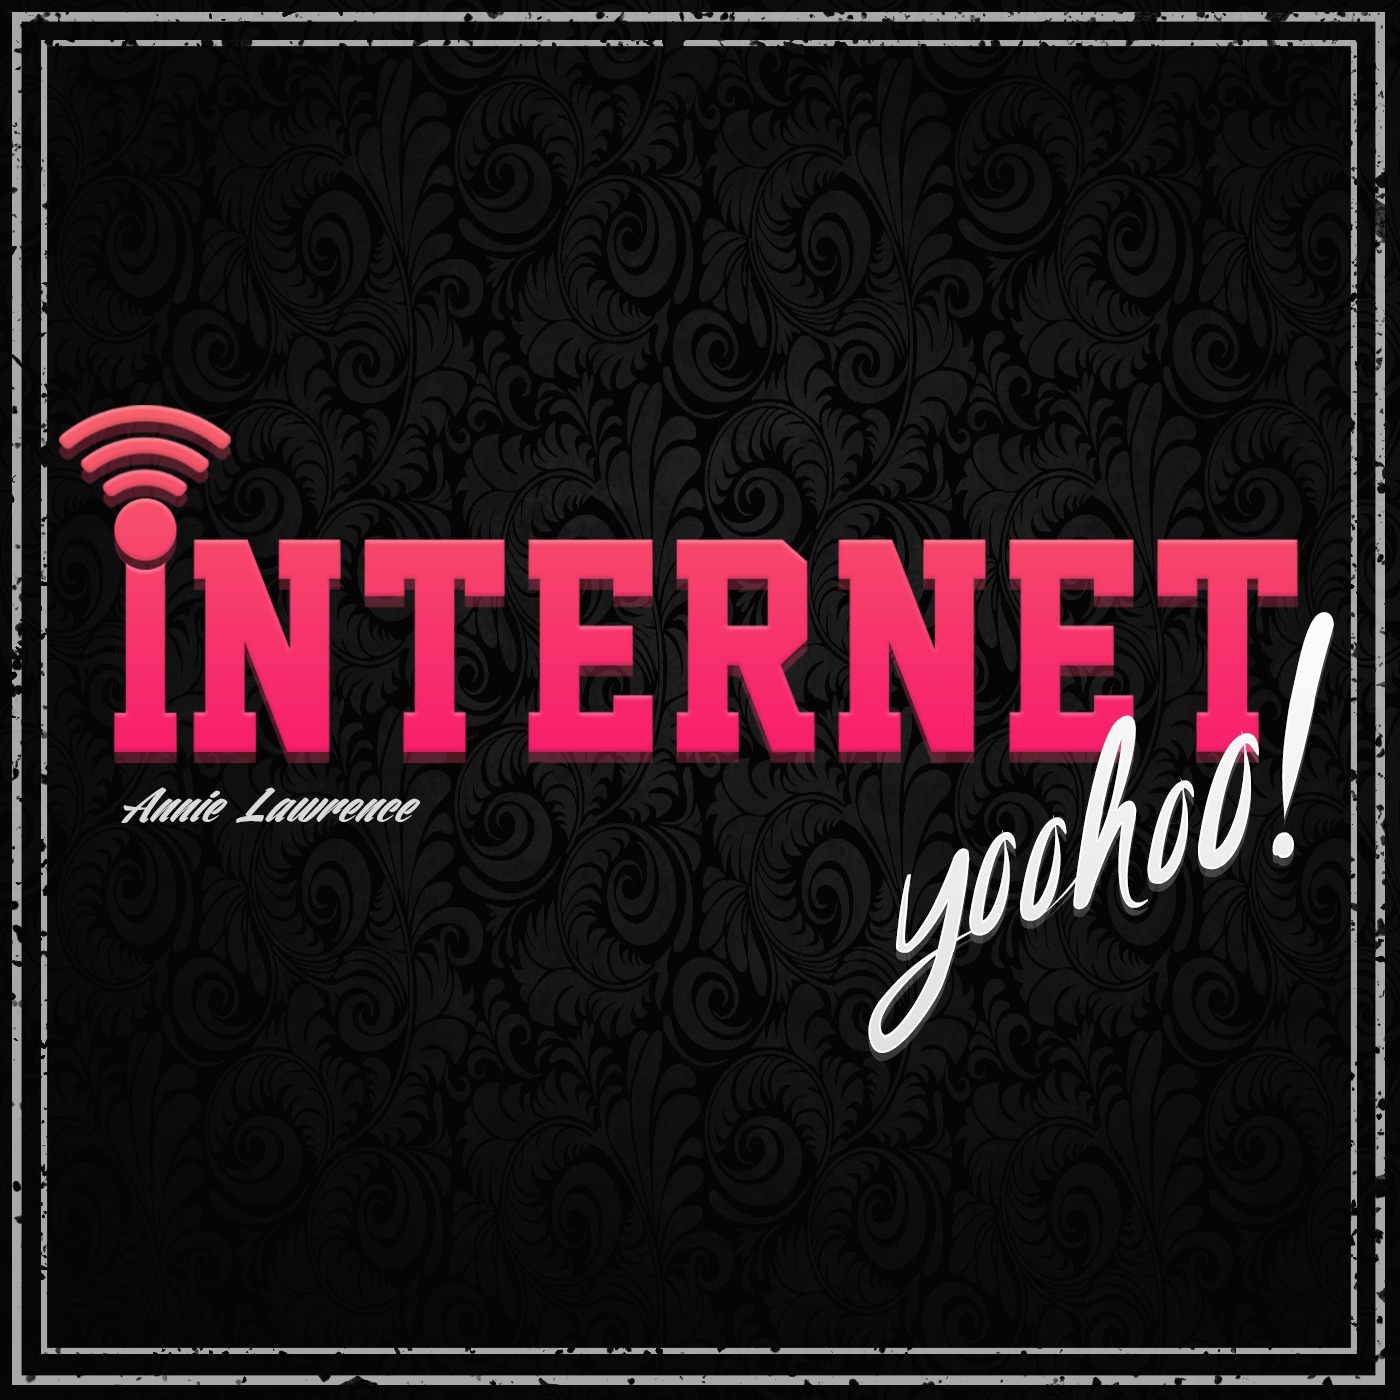 Internet Yoohoo!